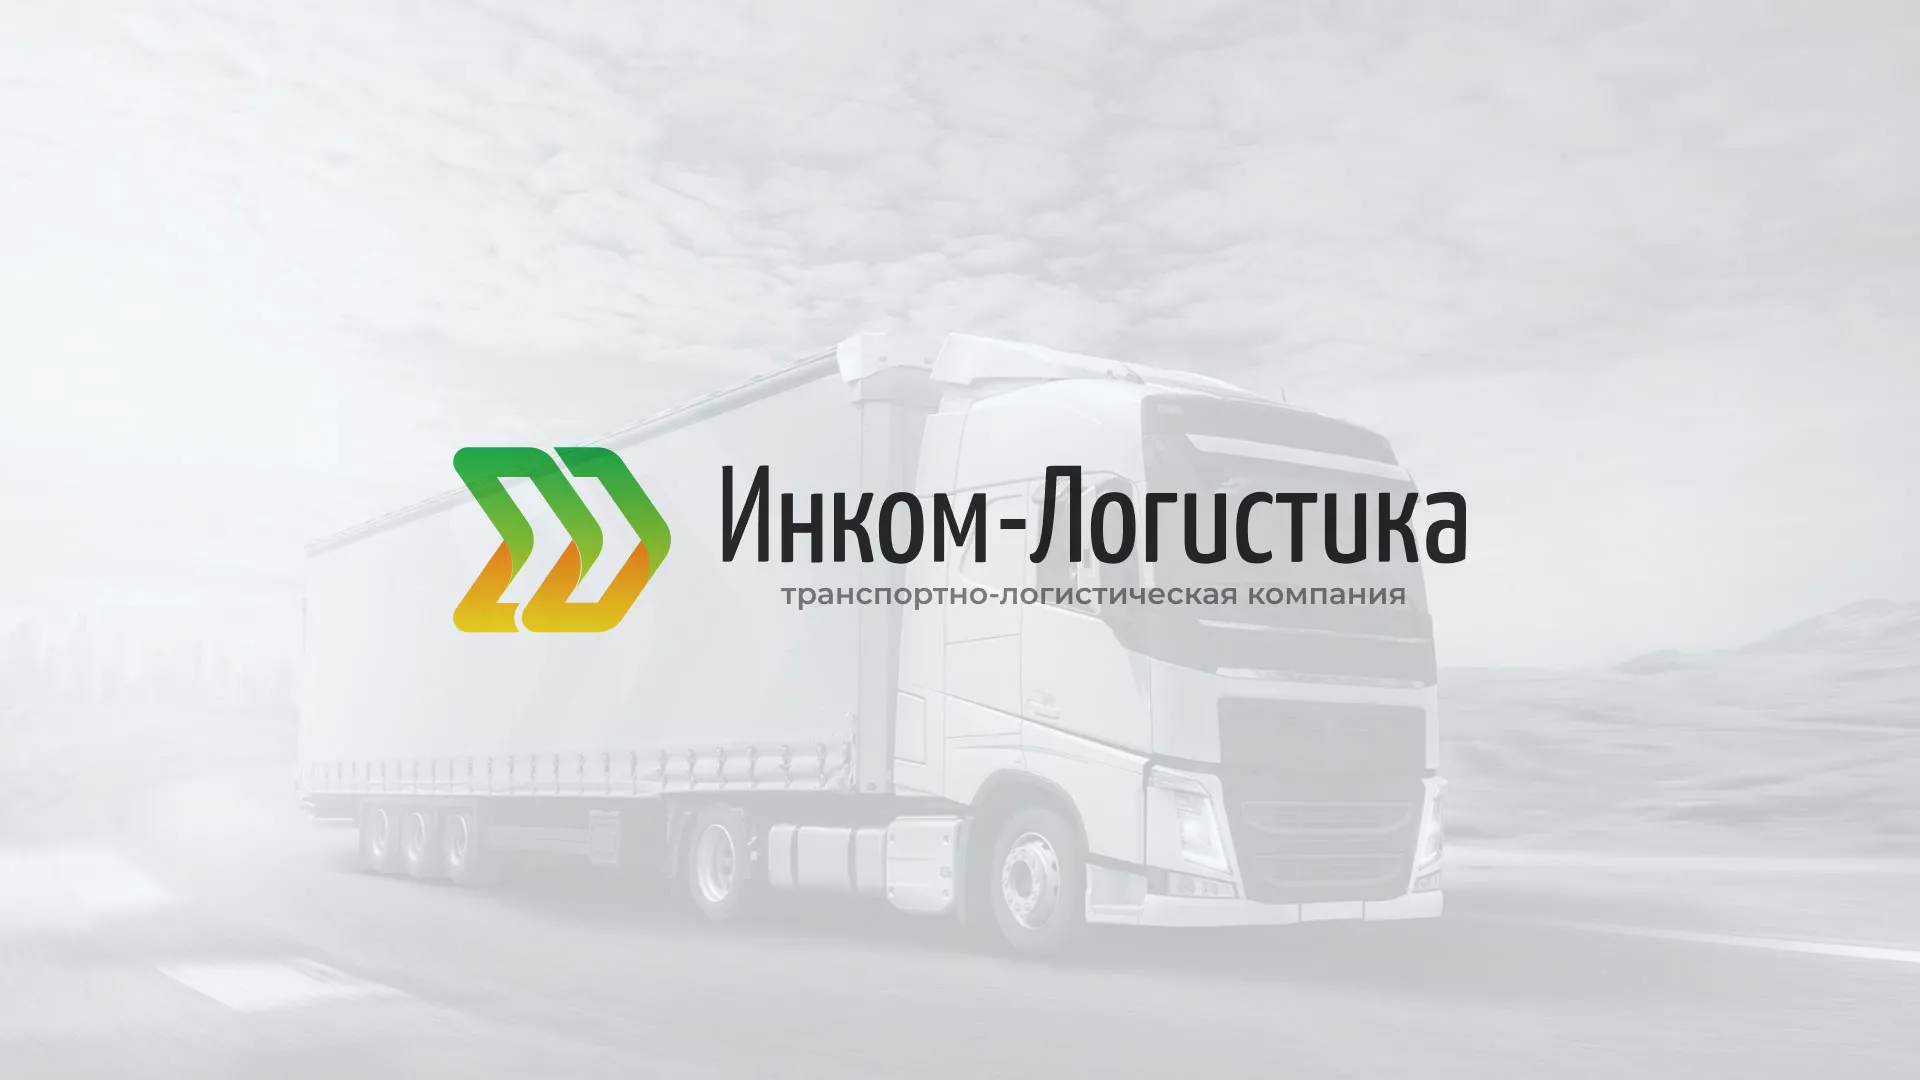 Разработка логотипа и сайта компании «Инком-Логистика» в Елизово